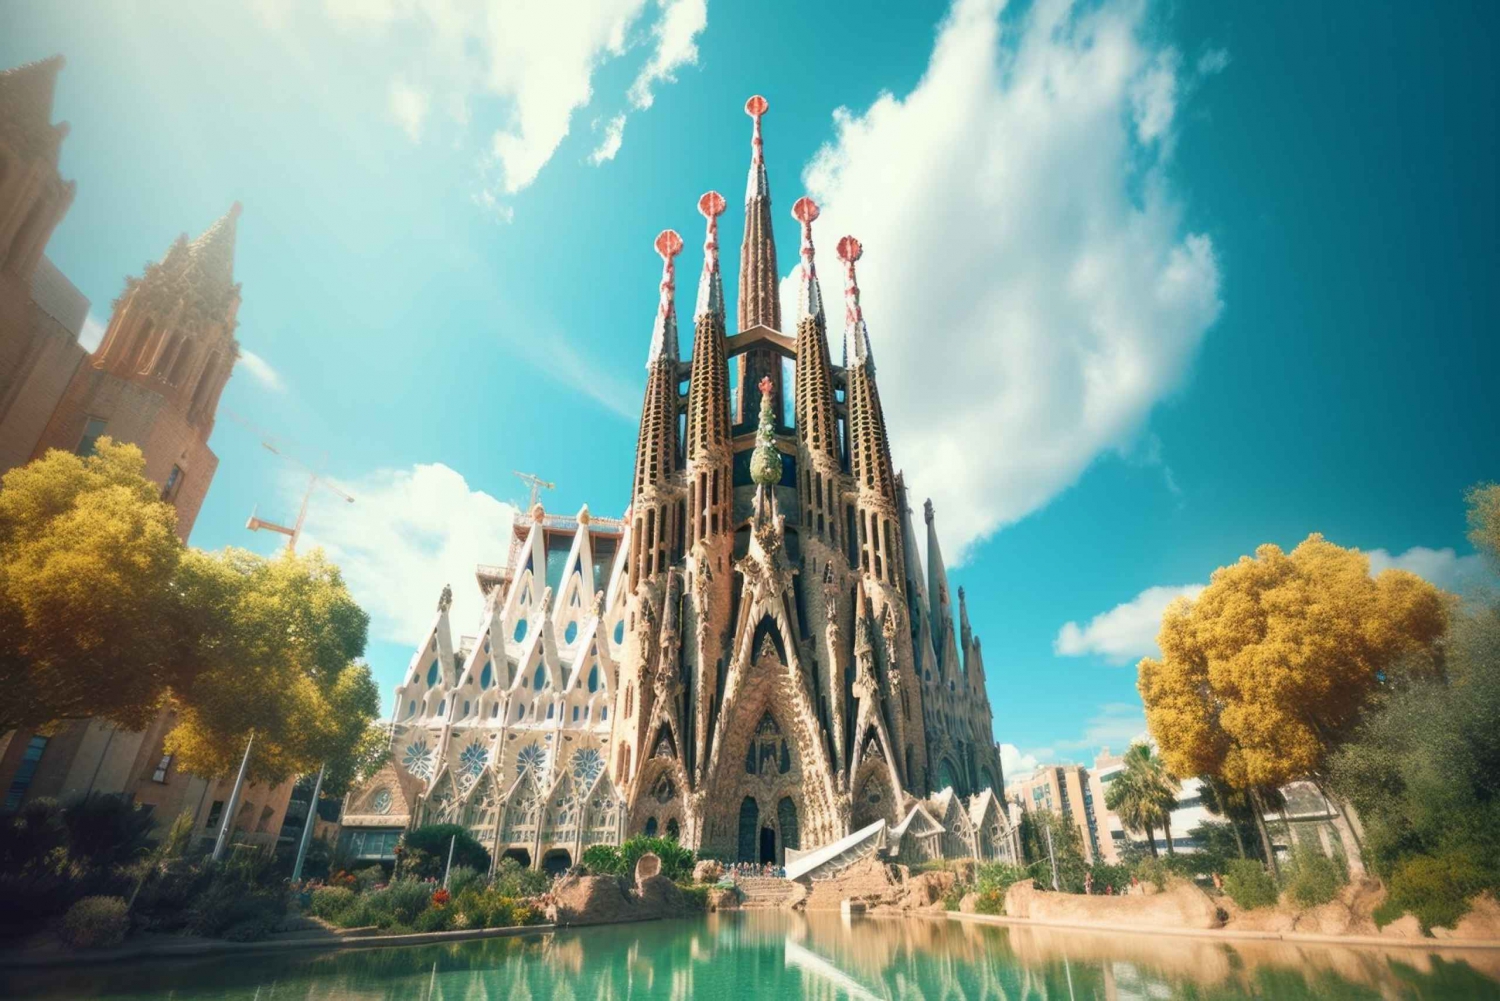 Gaudi's Barcelona: Sagrada Familia, Casa Batllo & Mila Tour